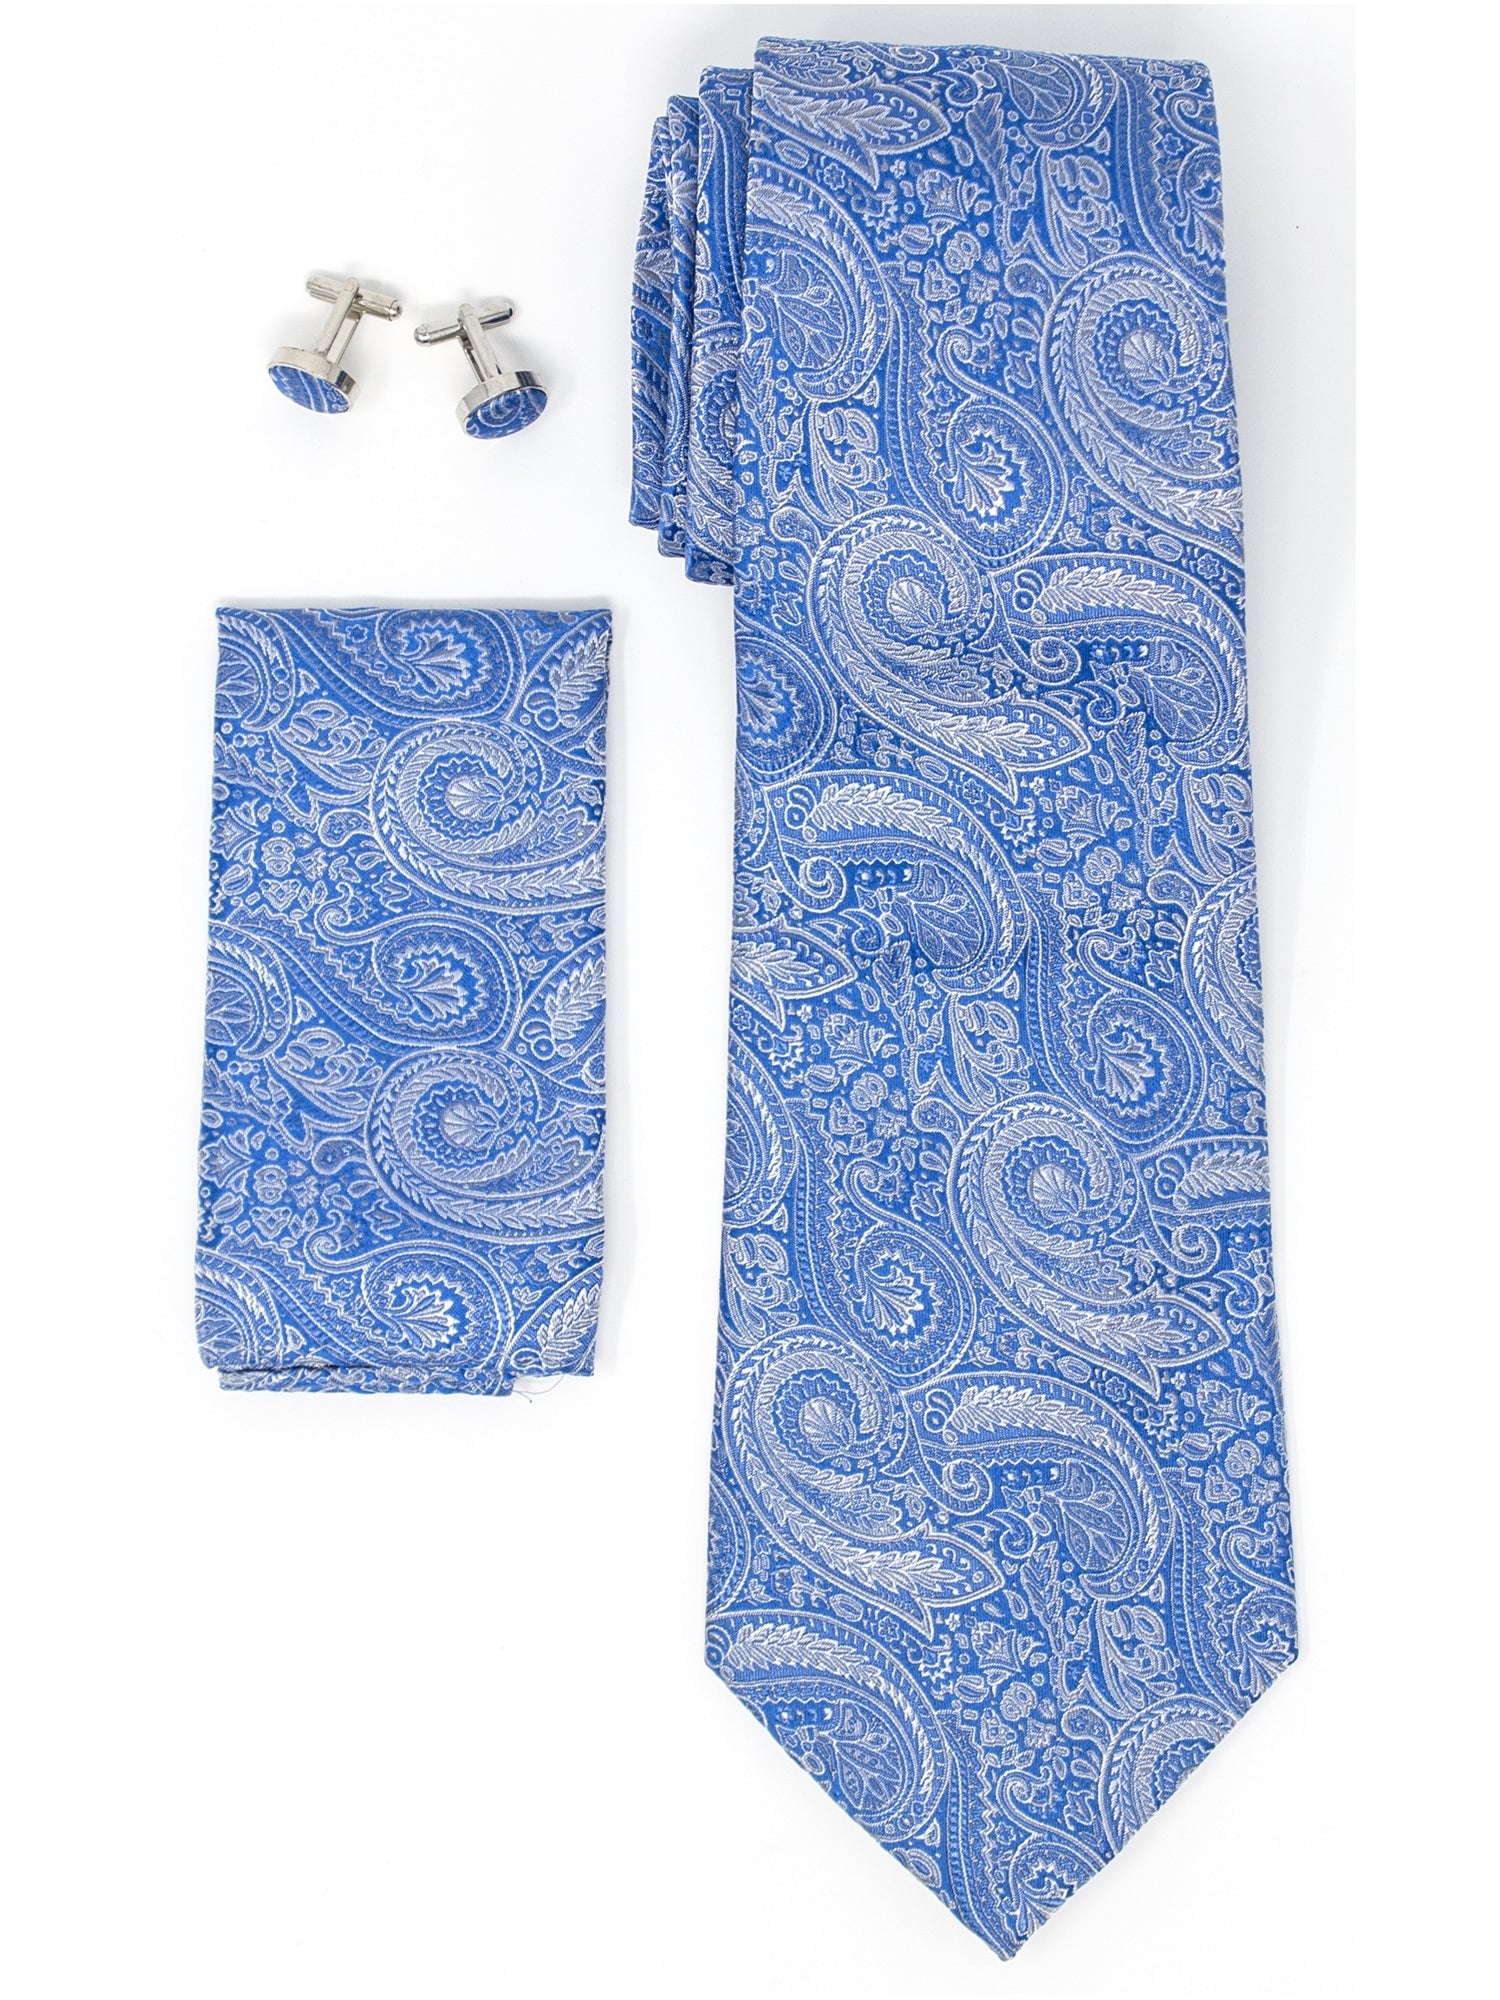 Men's Silk Neck Tie Set Cufflinks & Hanky Collection Neck Tie TheDapperTie Blue And White Paisley Regular 